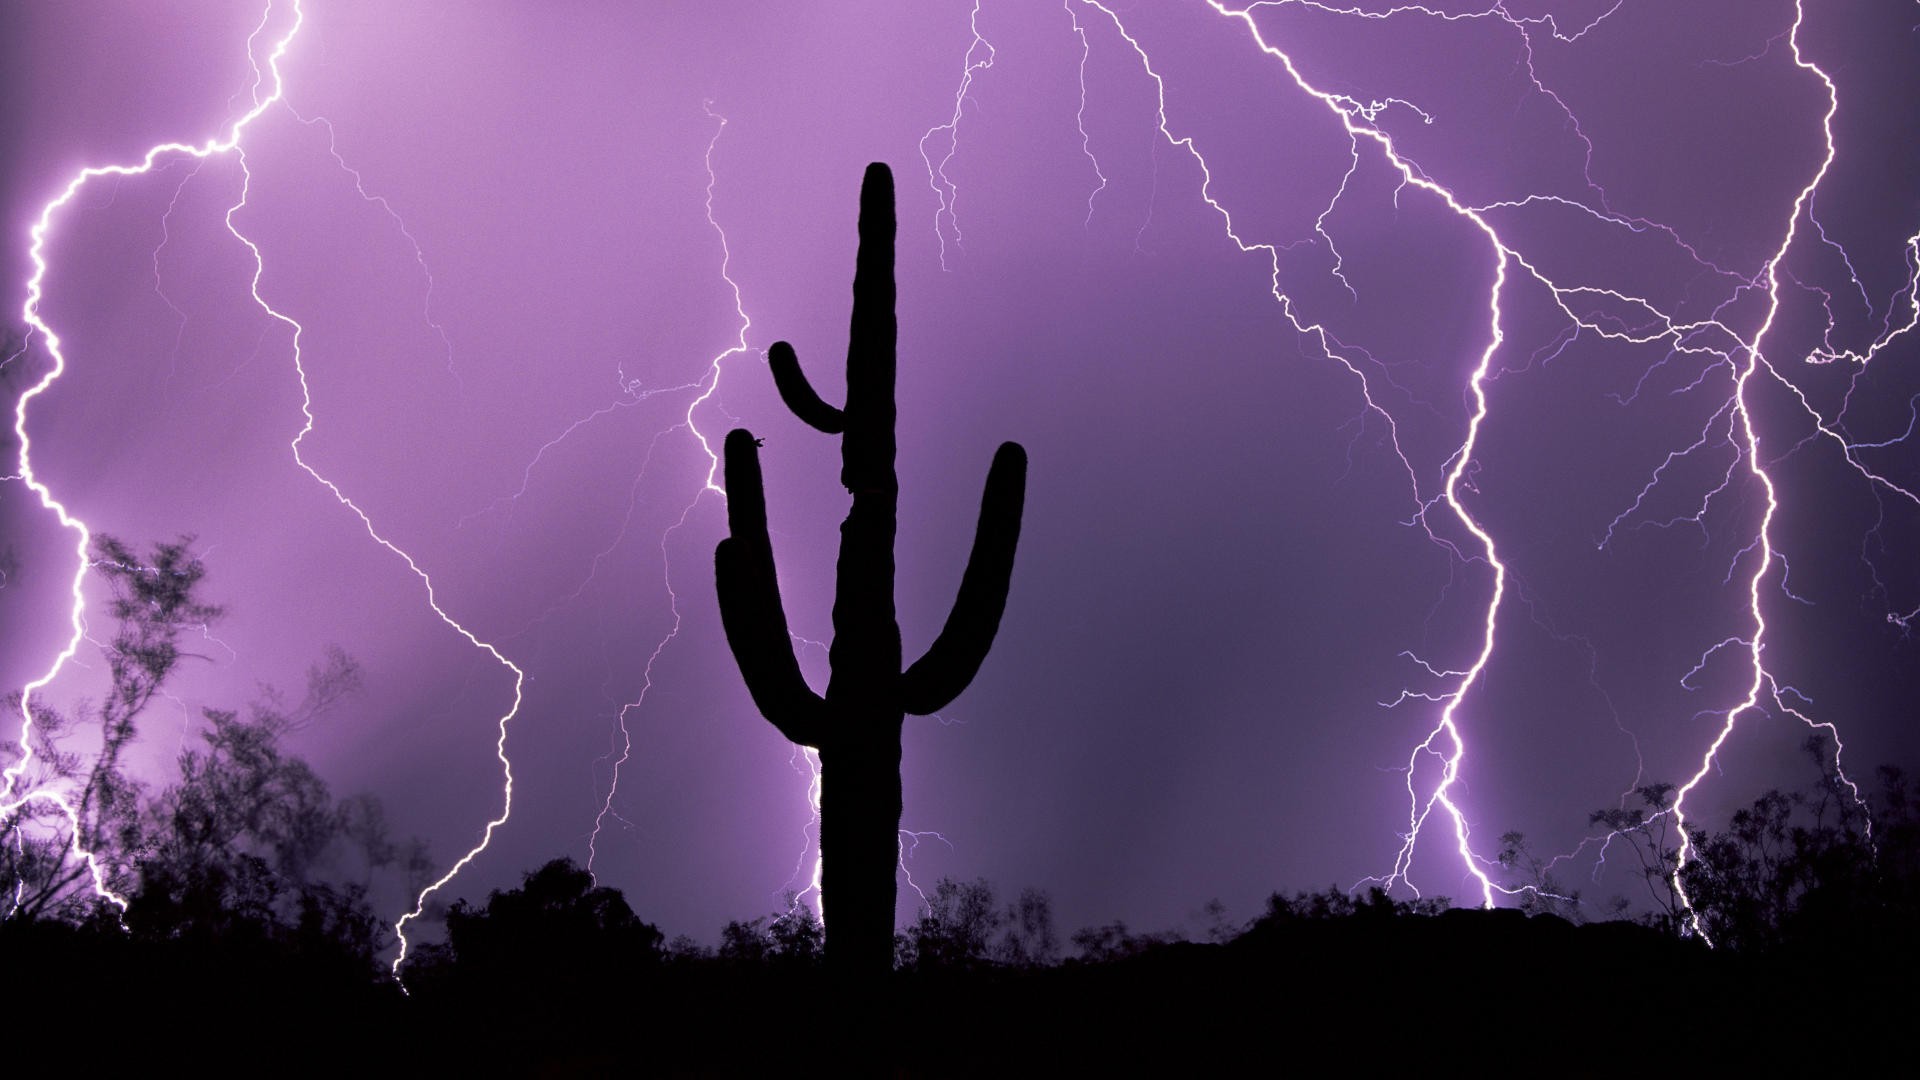 General 1920x1080 lightning silhouette night nature cactus purple sky storm